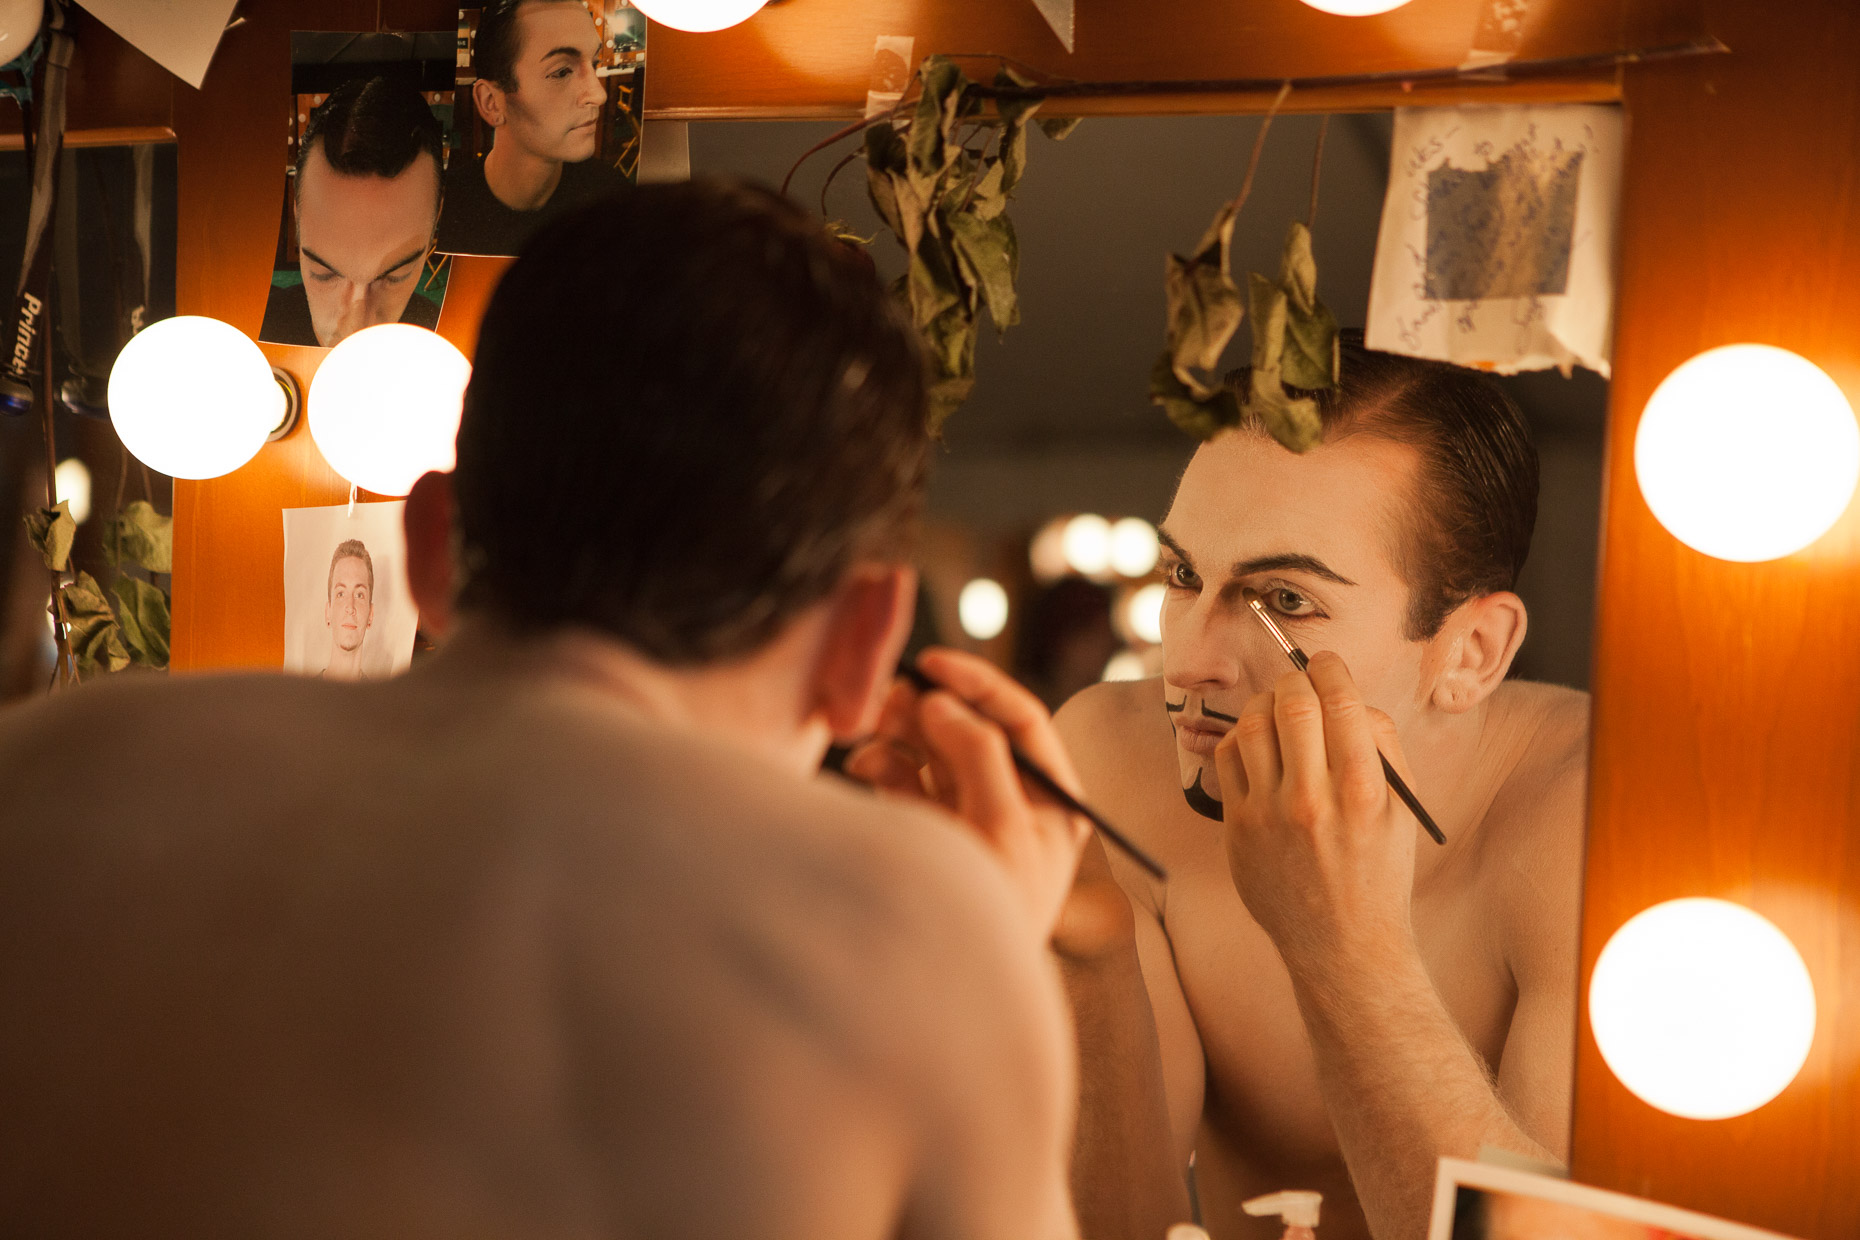 Performer applying makeup at Cirque Berzerk circus performers, by David Zaitz